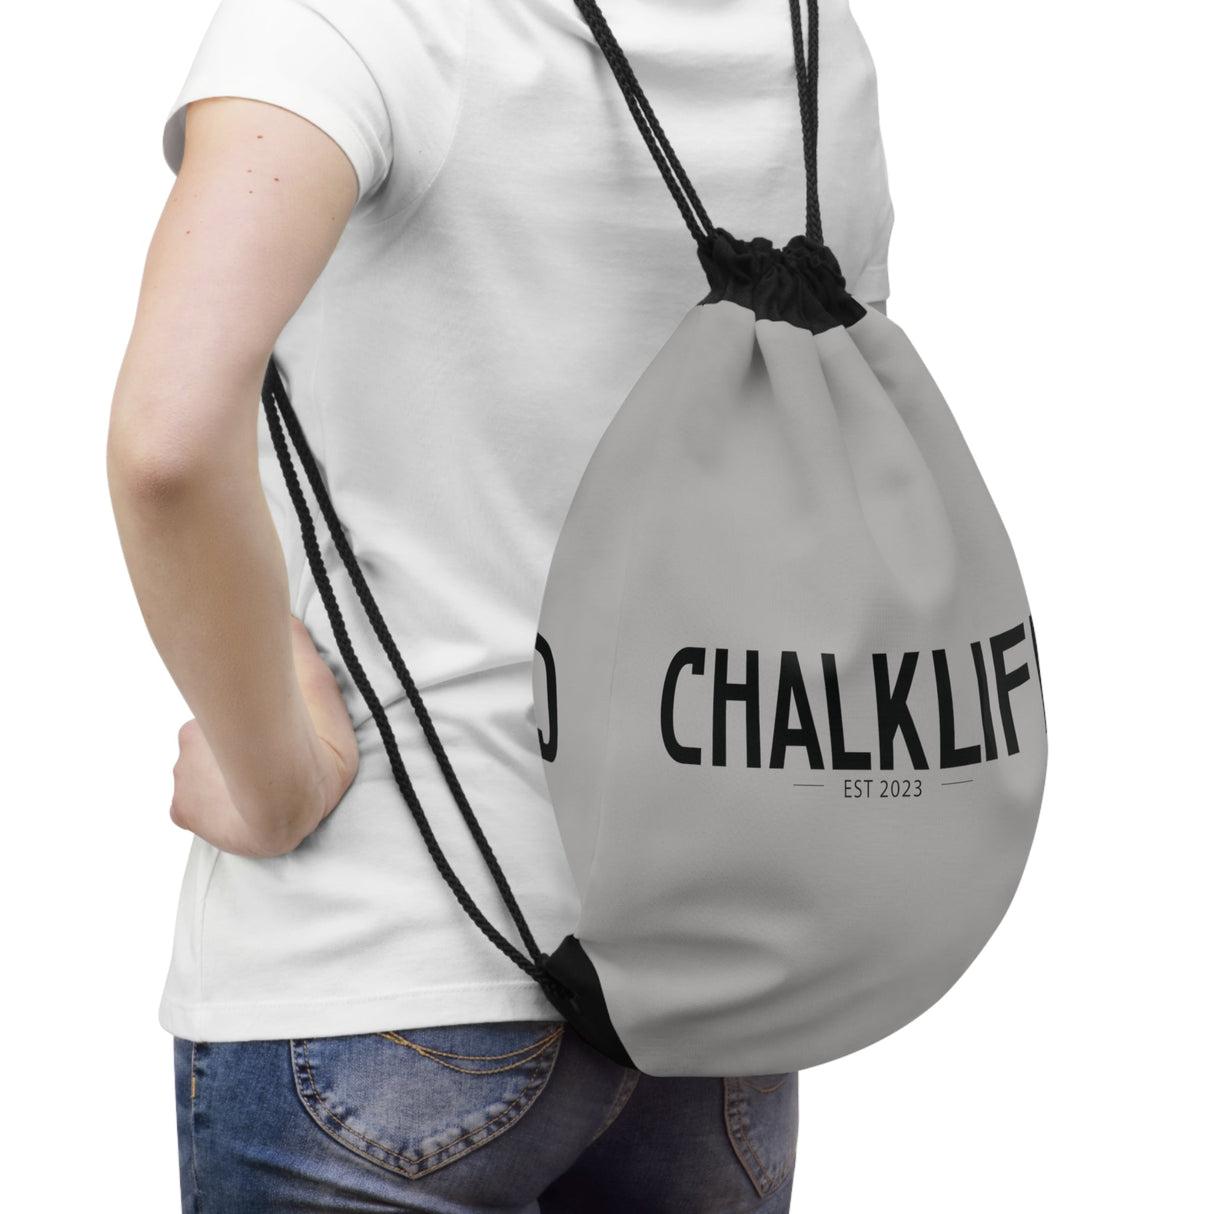 Chalklife Athletic Sling Bag - Chalklife, LLC